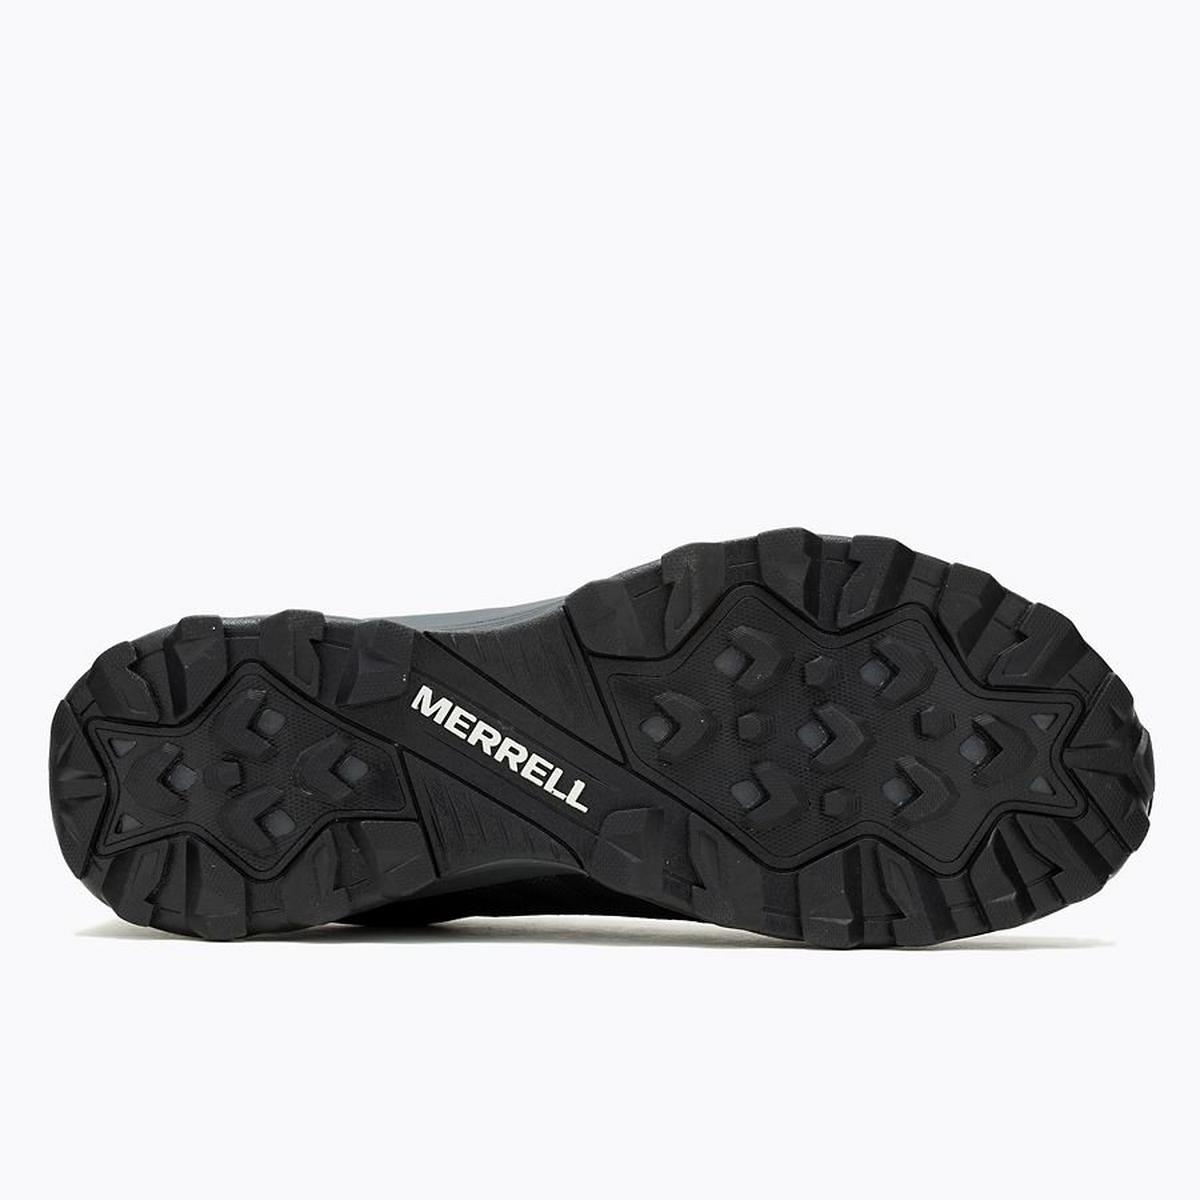 Merrell Speed Eco Waterproof | Walking Shoes | George Fisher UK